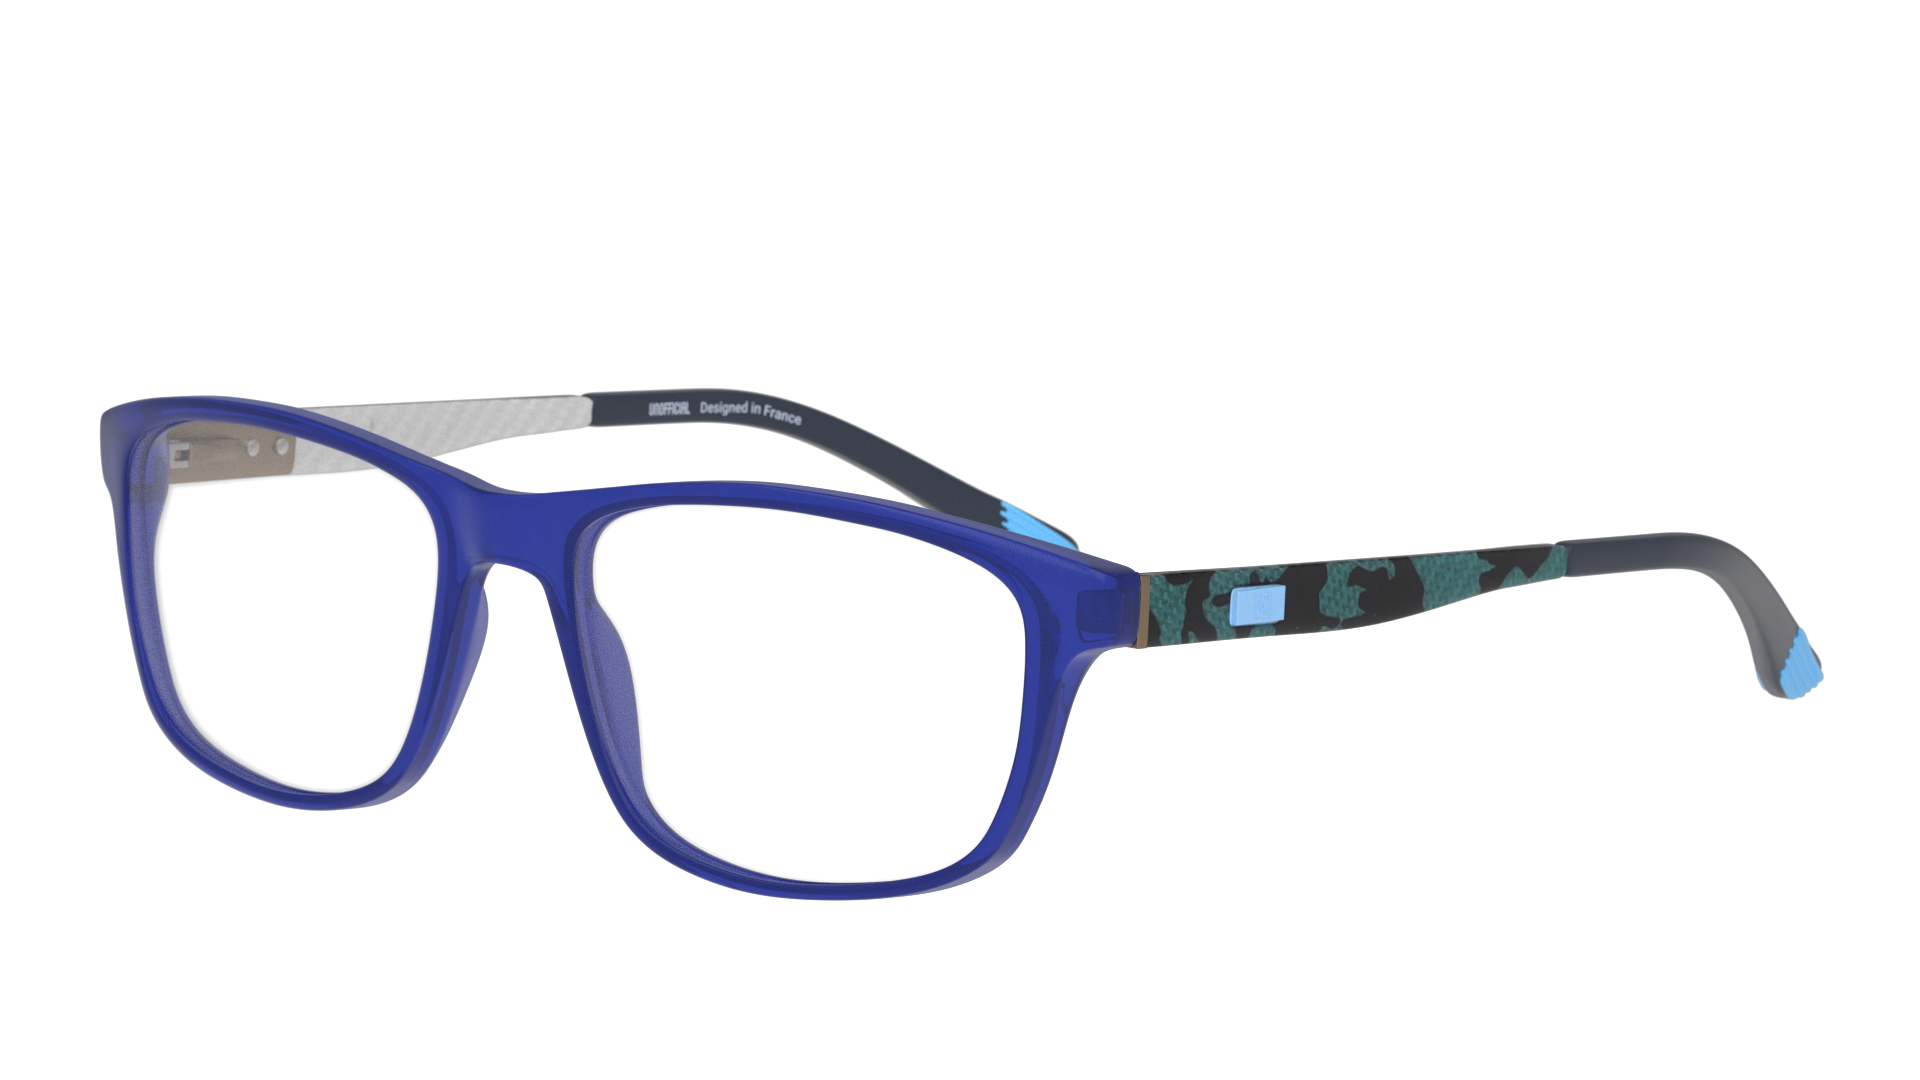 Angle_Left01 Unofficial UNOM0093 Glasses Transparent / Blue